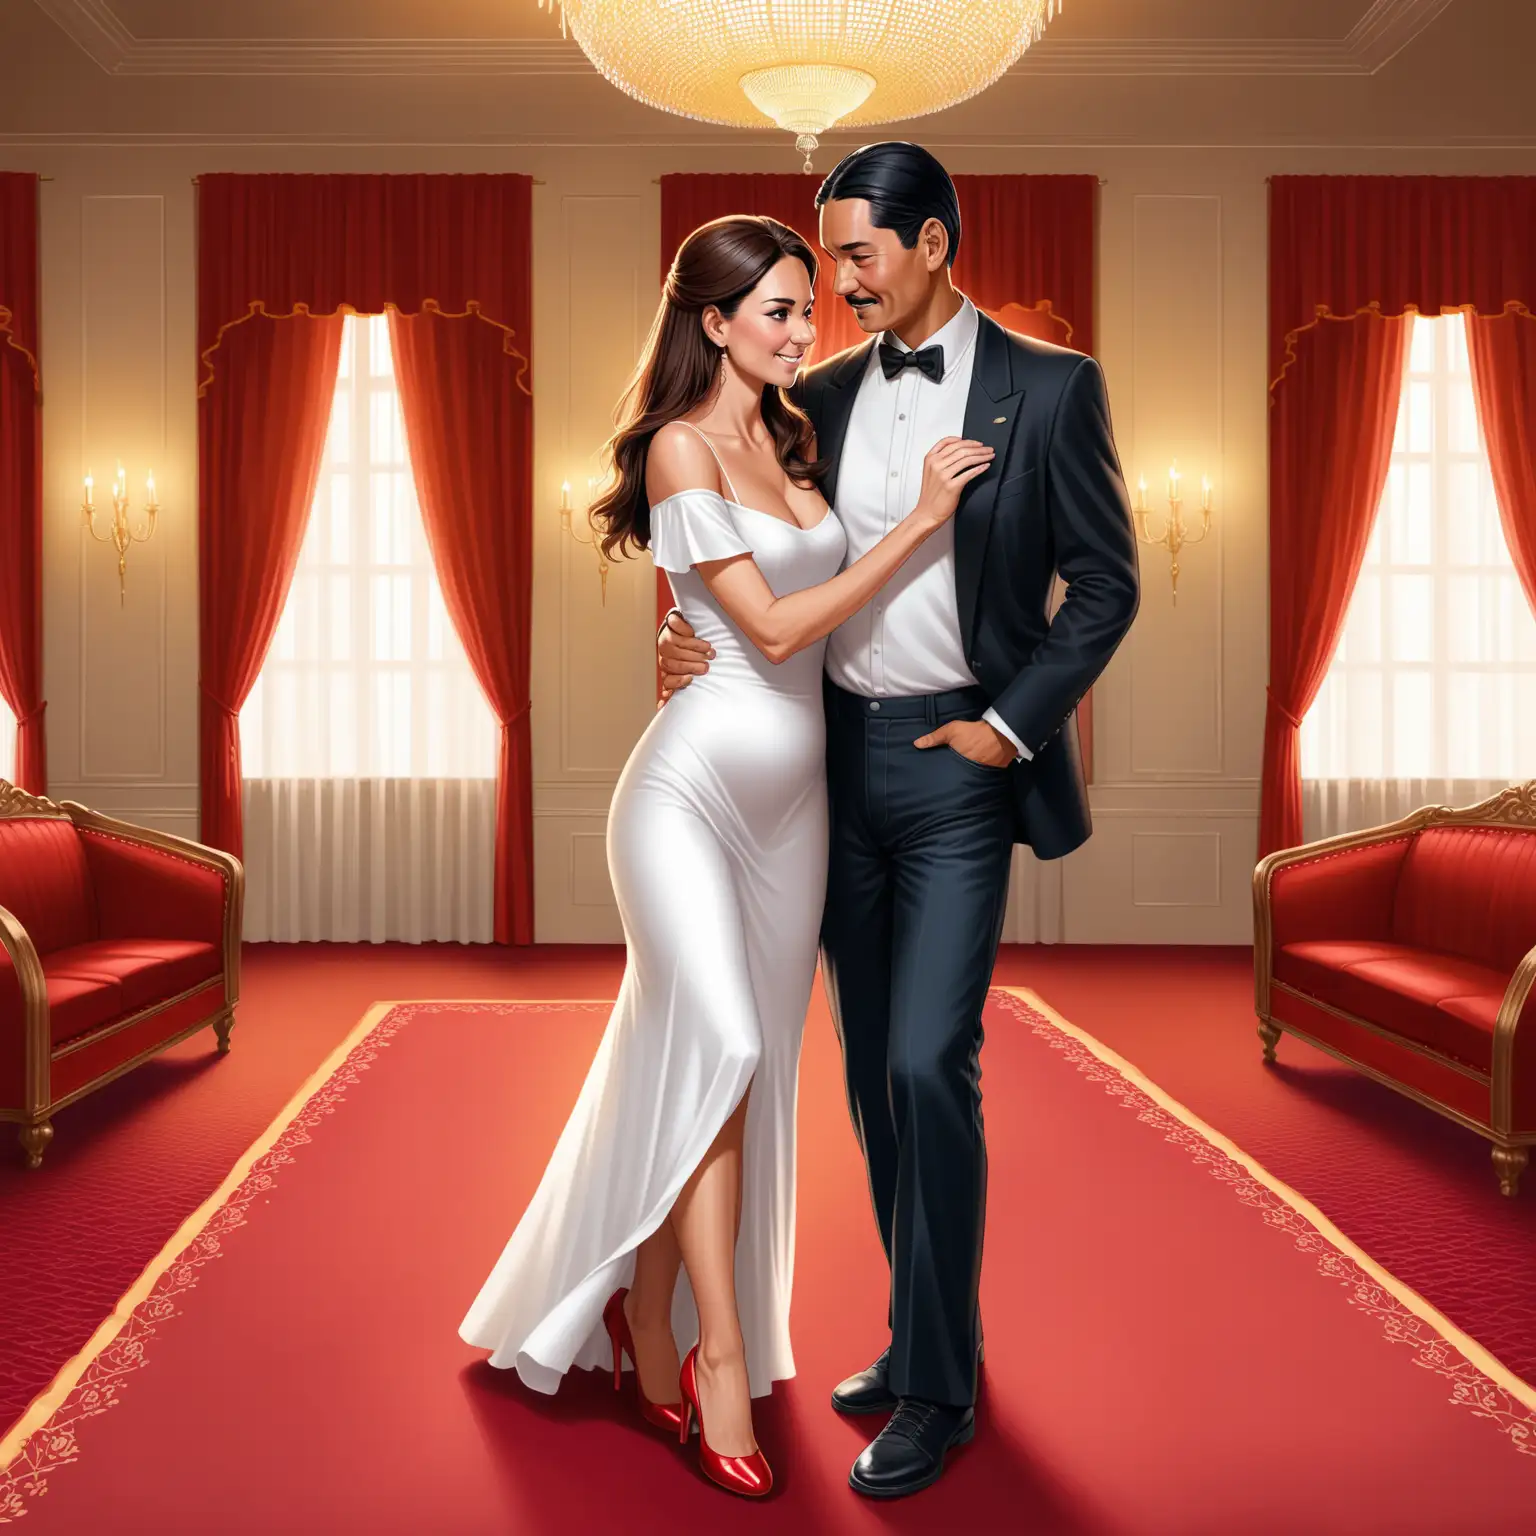 Elegant Waltz Kate Middleton and Andean Gentleman Dance in Ballroom Splendor